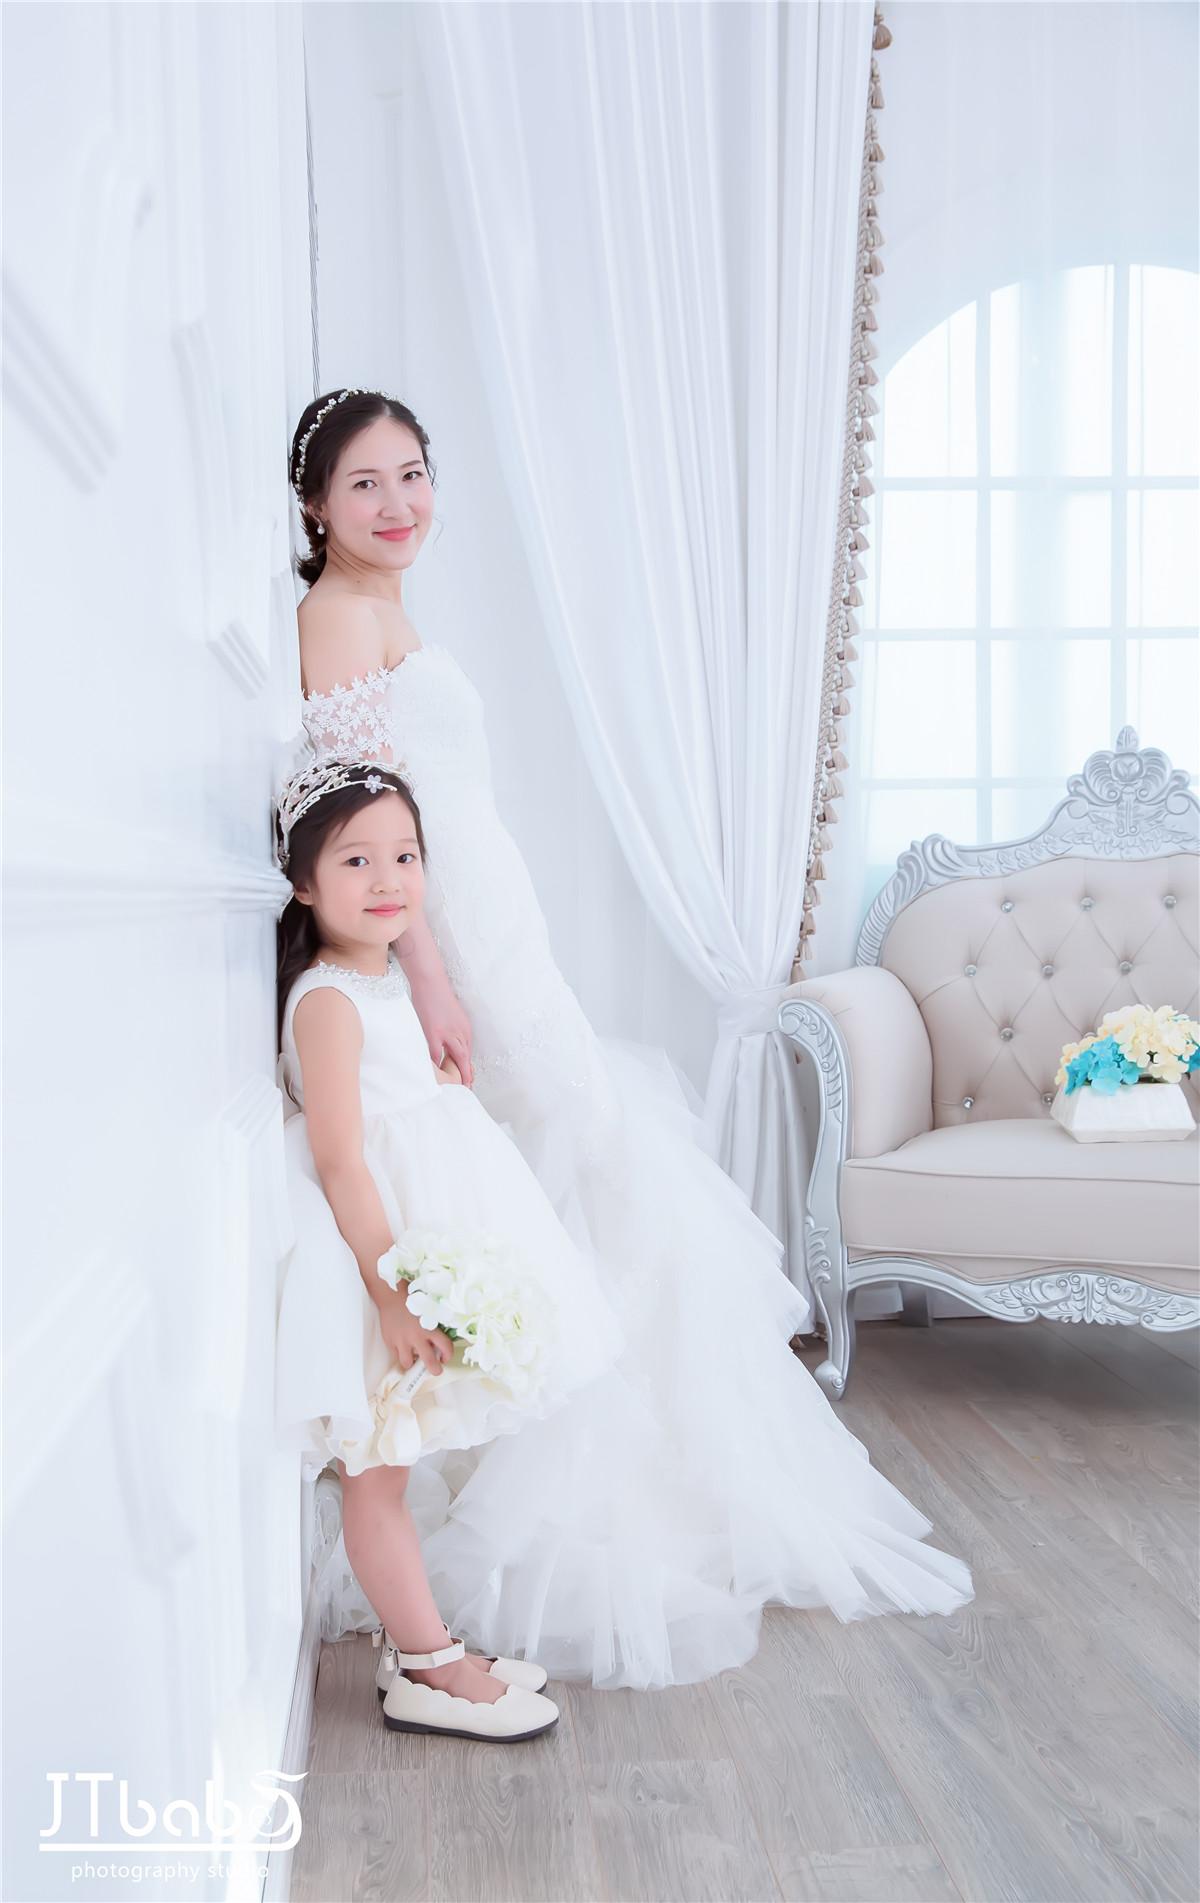 jtbaby韩式儿童摄影亲子婚纱客照